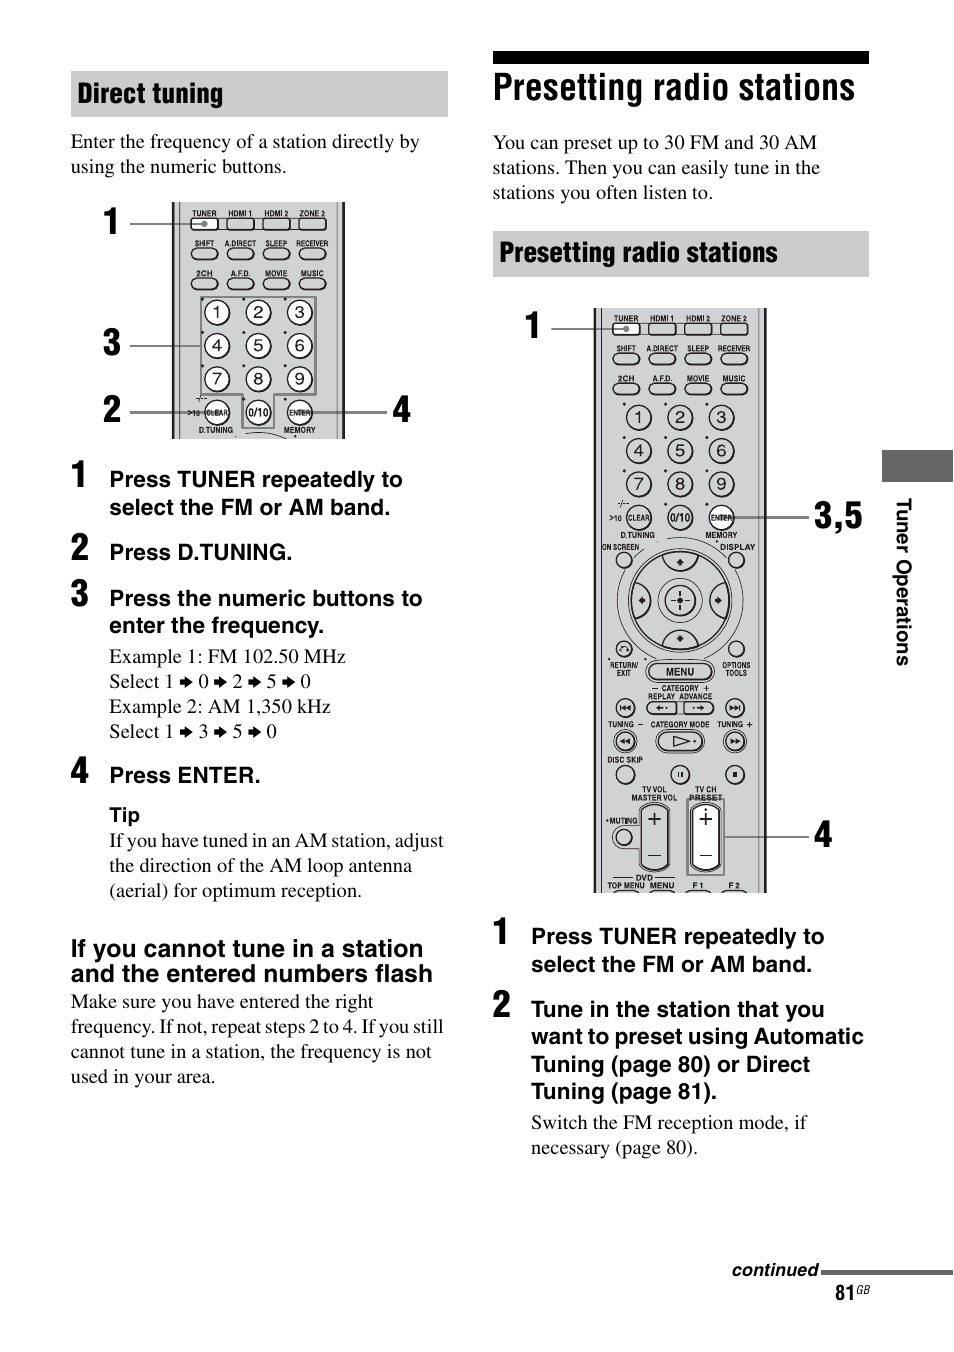 Presetting radio stations, E 81, 86 | Sony STR-DG1000 User Manual | Page 81 / 123